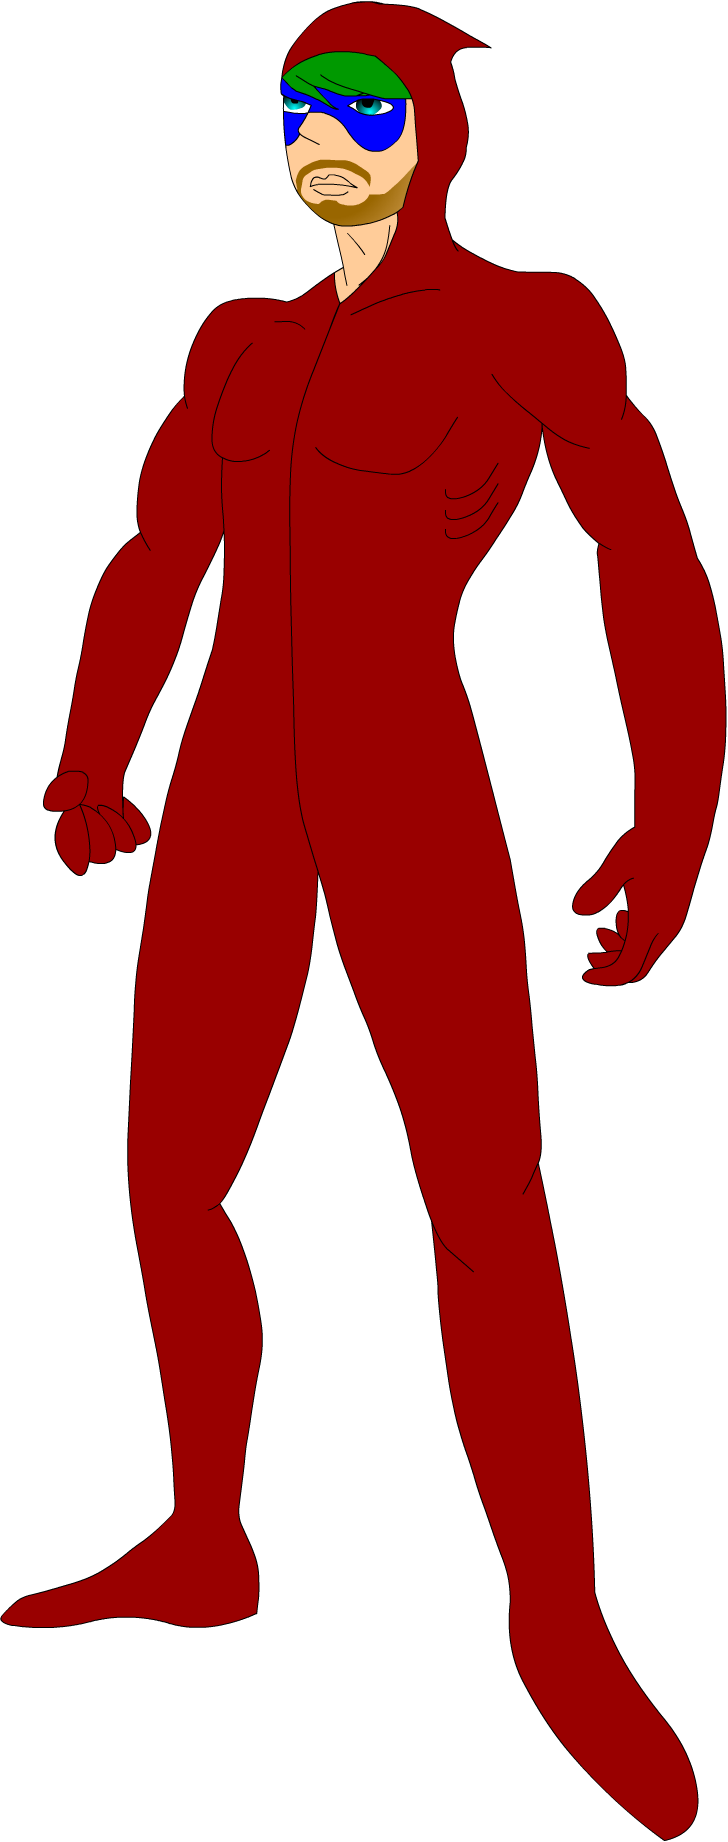 Jackaboy Man Costume By Mecha-mike - Illustration (728x1842)